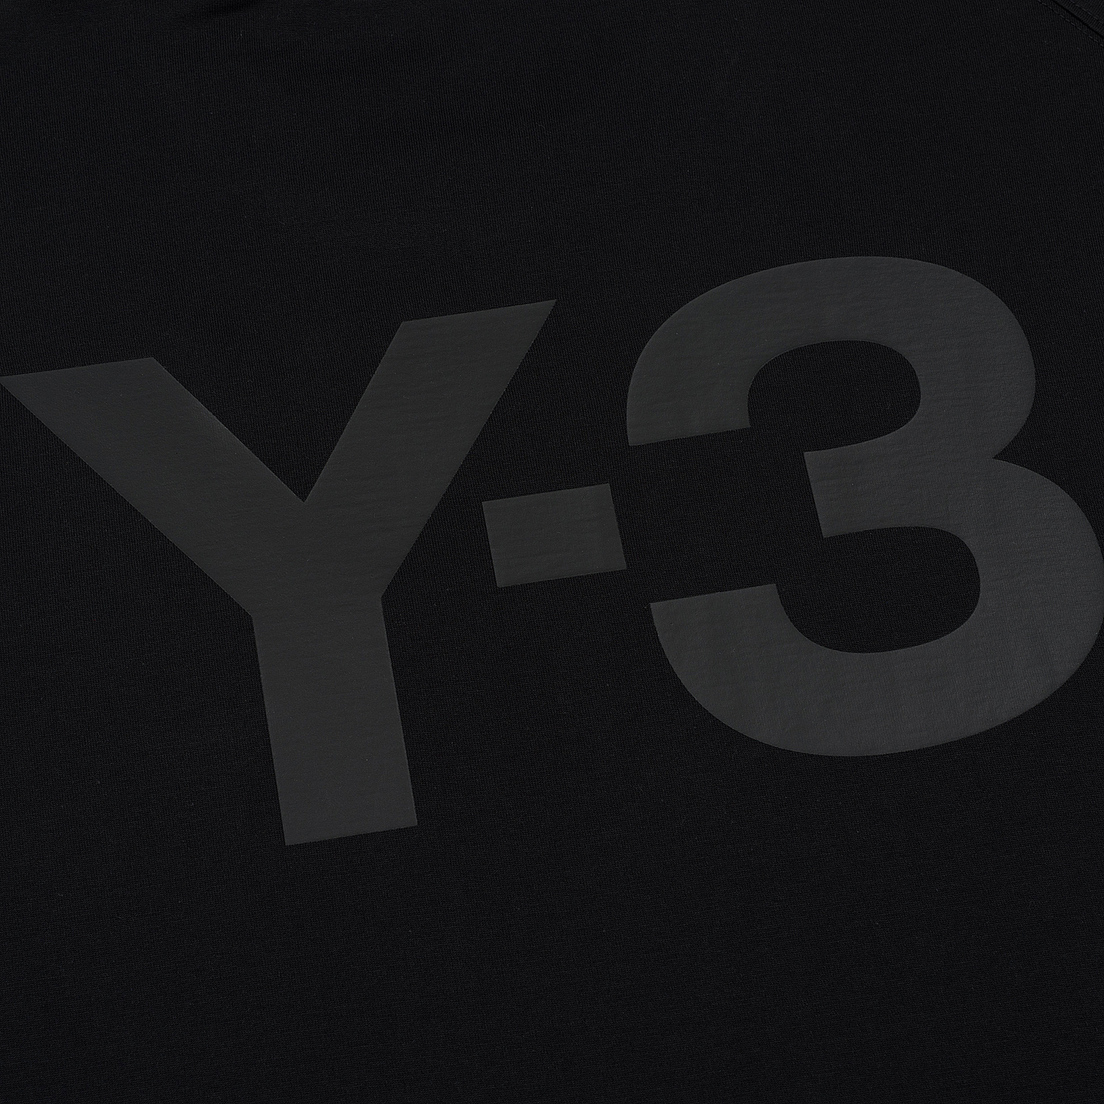 Y-3 Мужская футболка Classic Crew Back Logo Printed